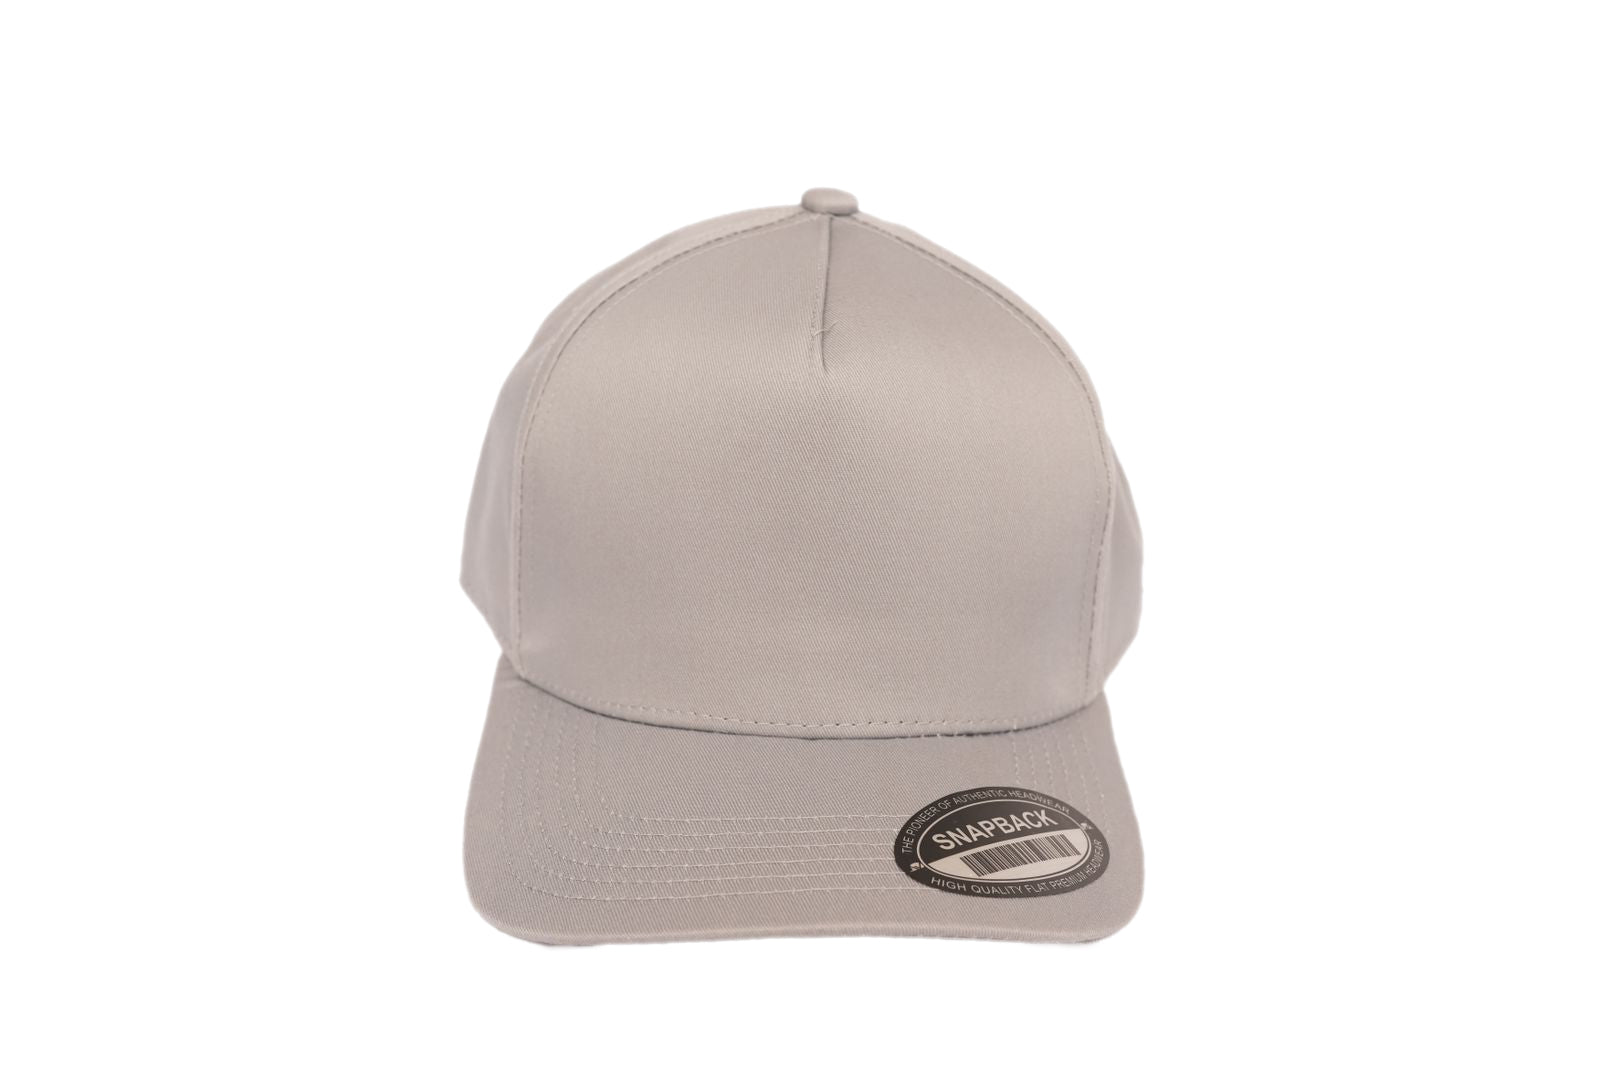 Cheap Custom Hats - Adjustable Cotton Twill Hat - Blank